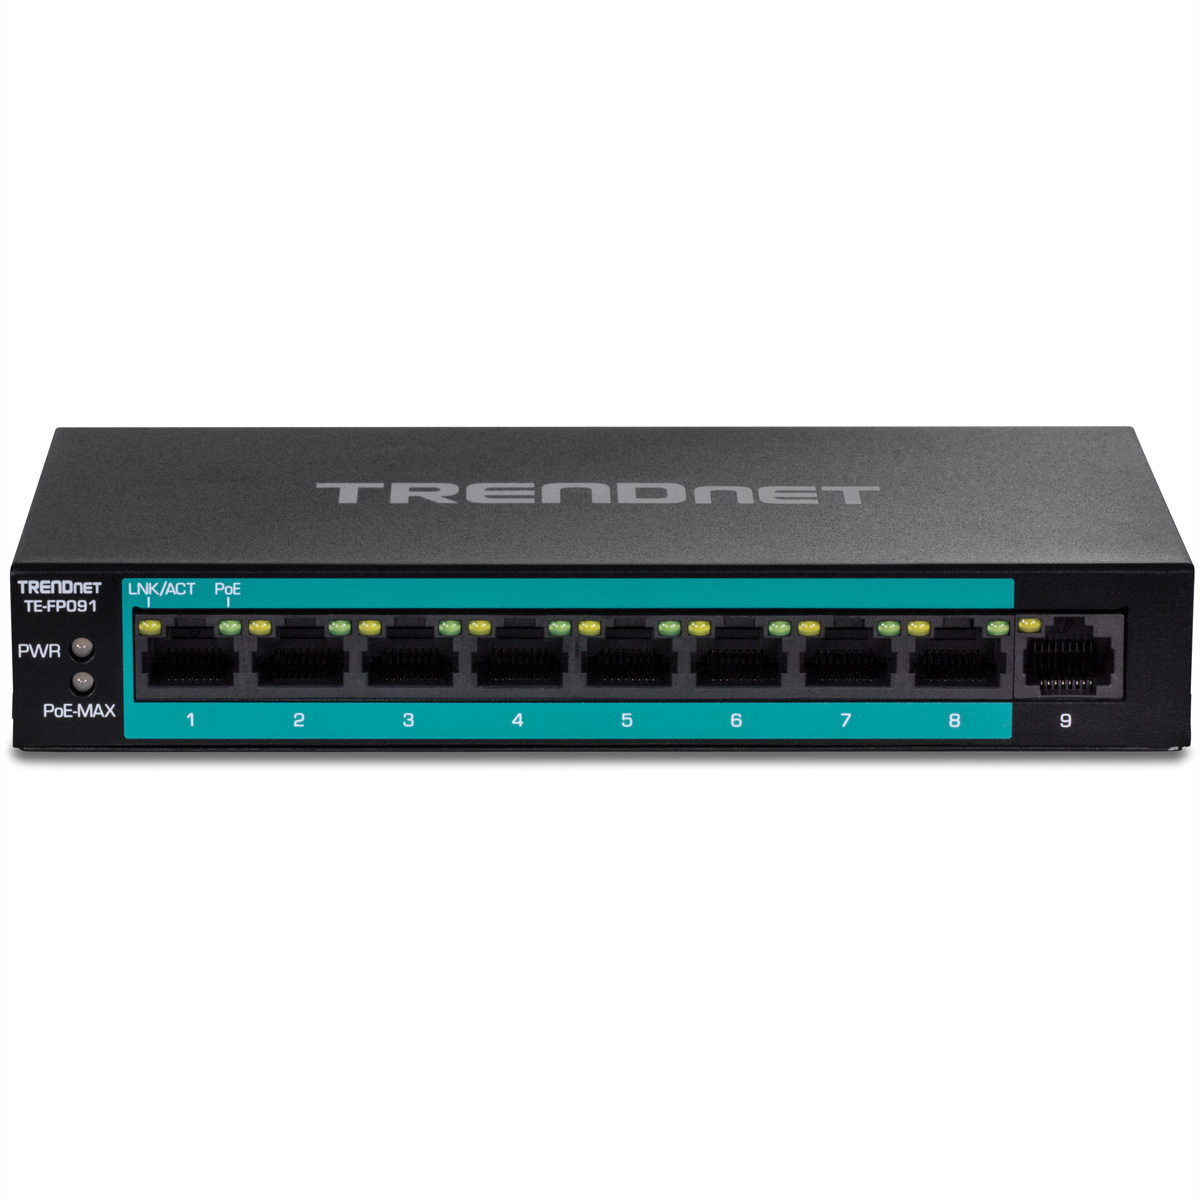 Ethernet Fast Range TRENDNET Switch PoE PoE+ Switch Ethernet TE-FP091 9-Port Fast Long